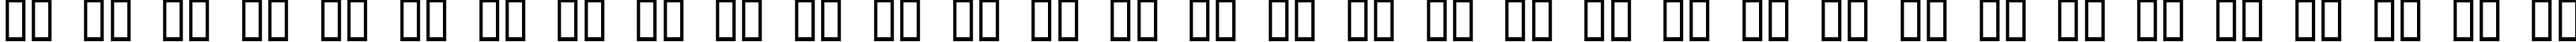 Пример написания русского алфавита шрифтом XFiles